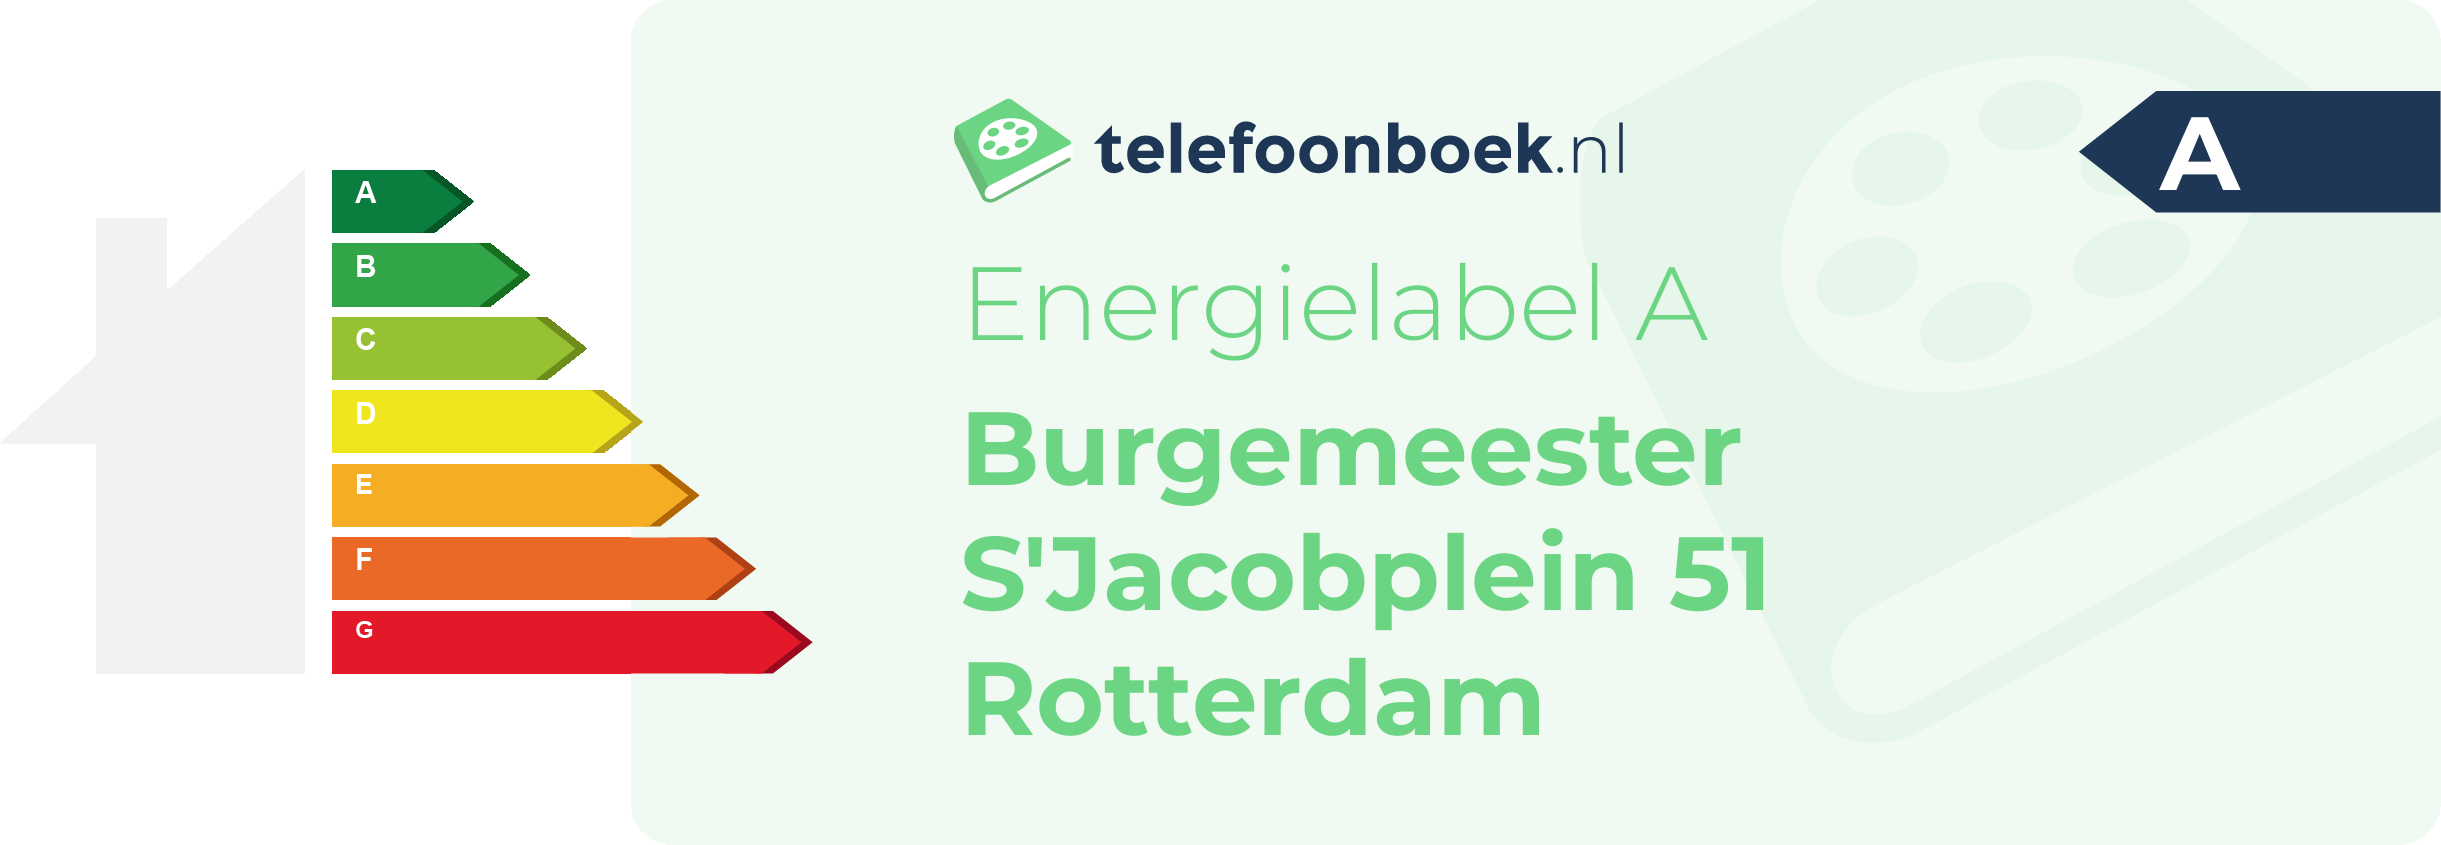 Energielabel Burgemeester S'Jacobplein 51 Rotterdam